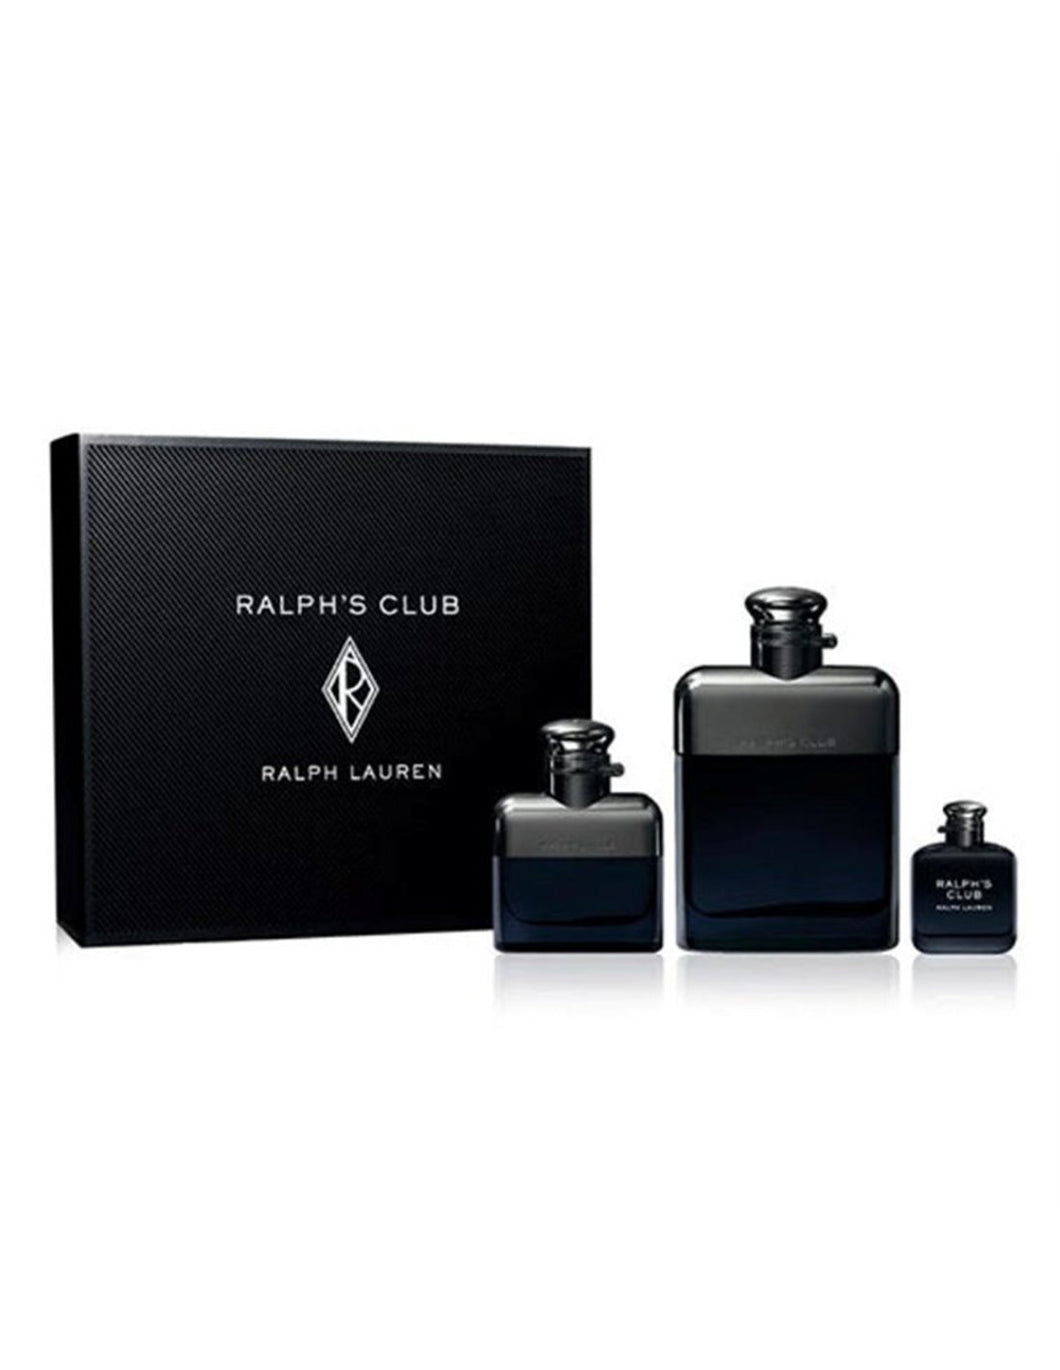 Ralph's Club Men Gift Set by Ralph Lauren Eau de Parfum